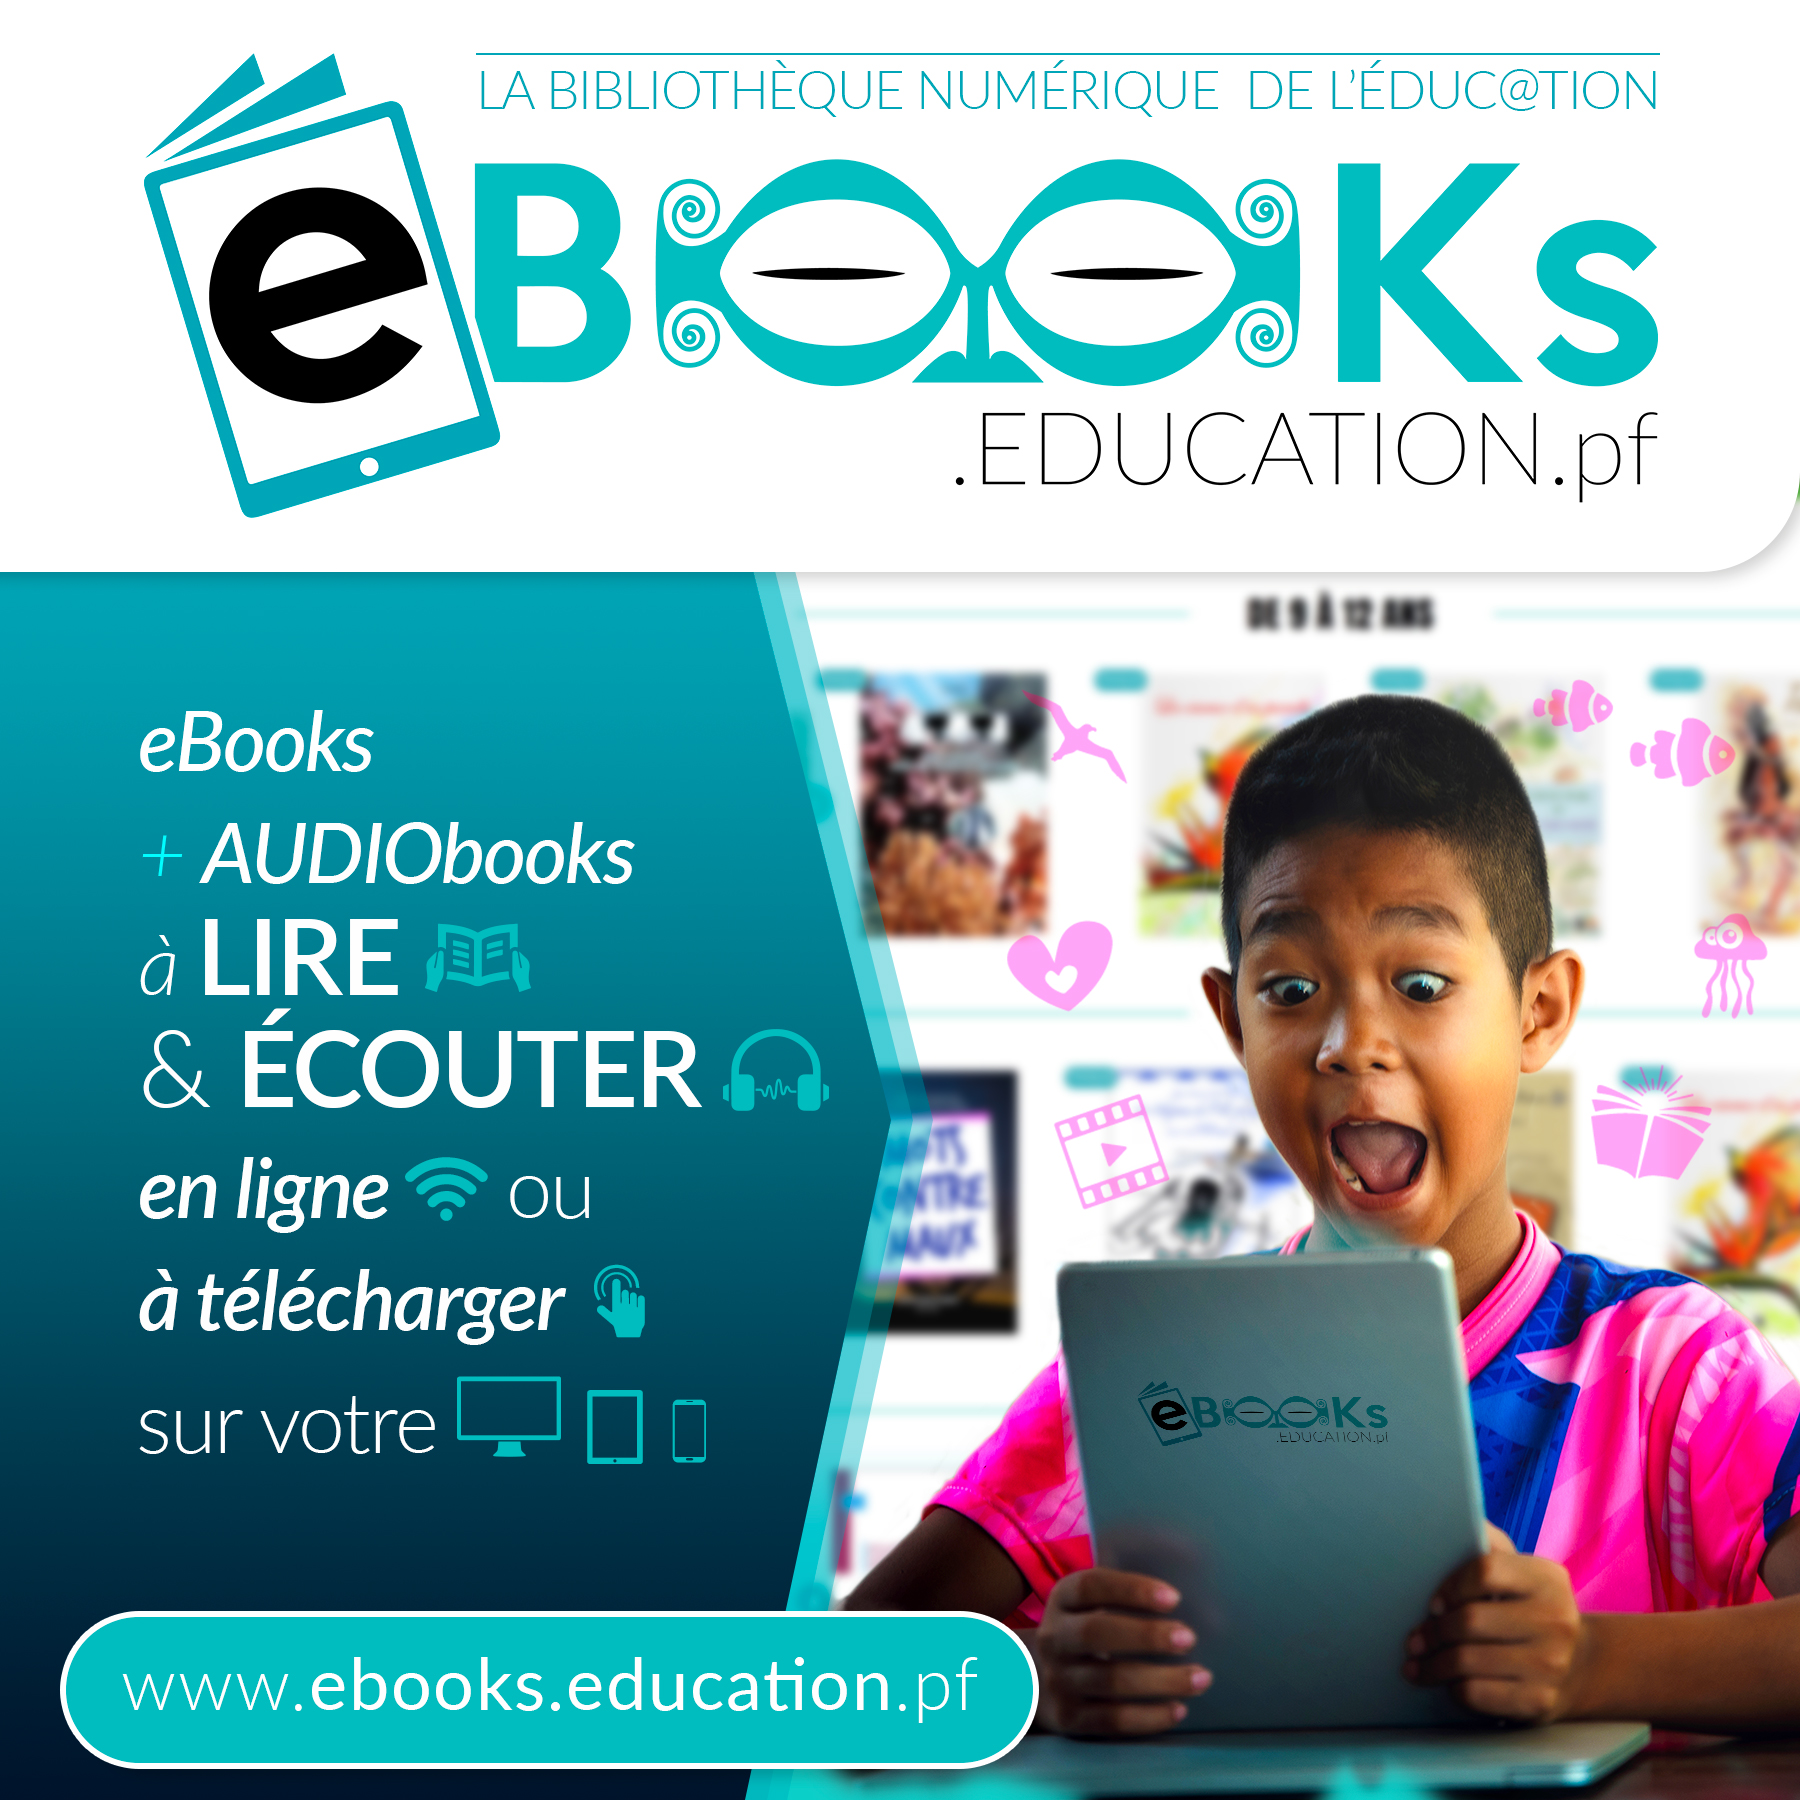 Promo ebooks education